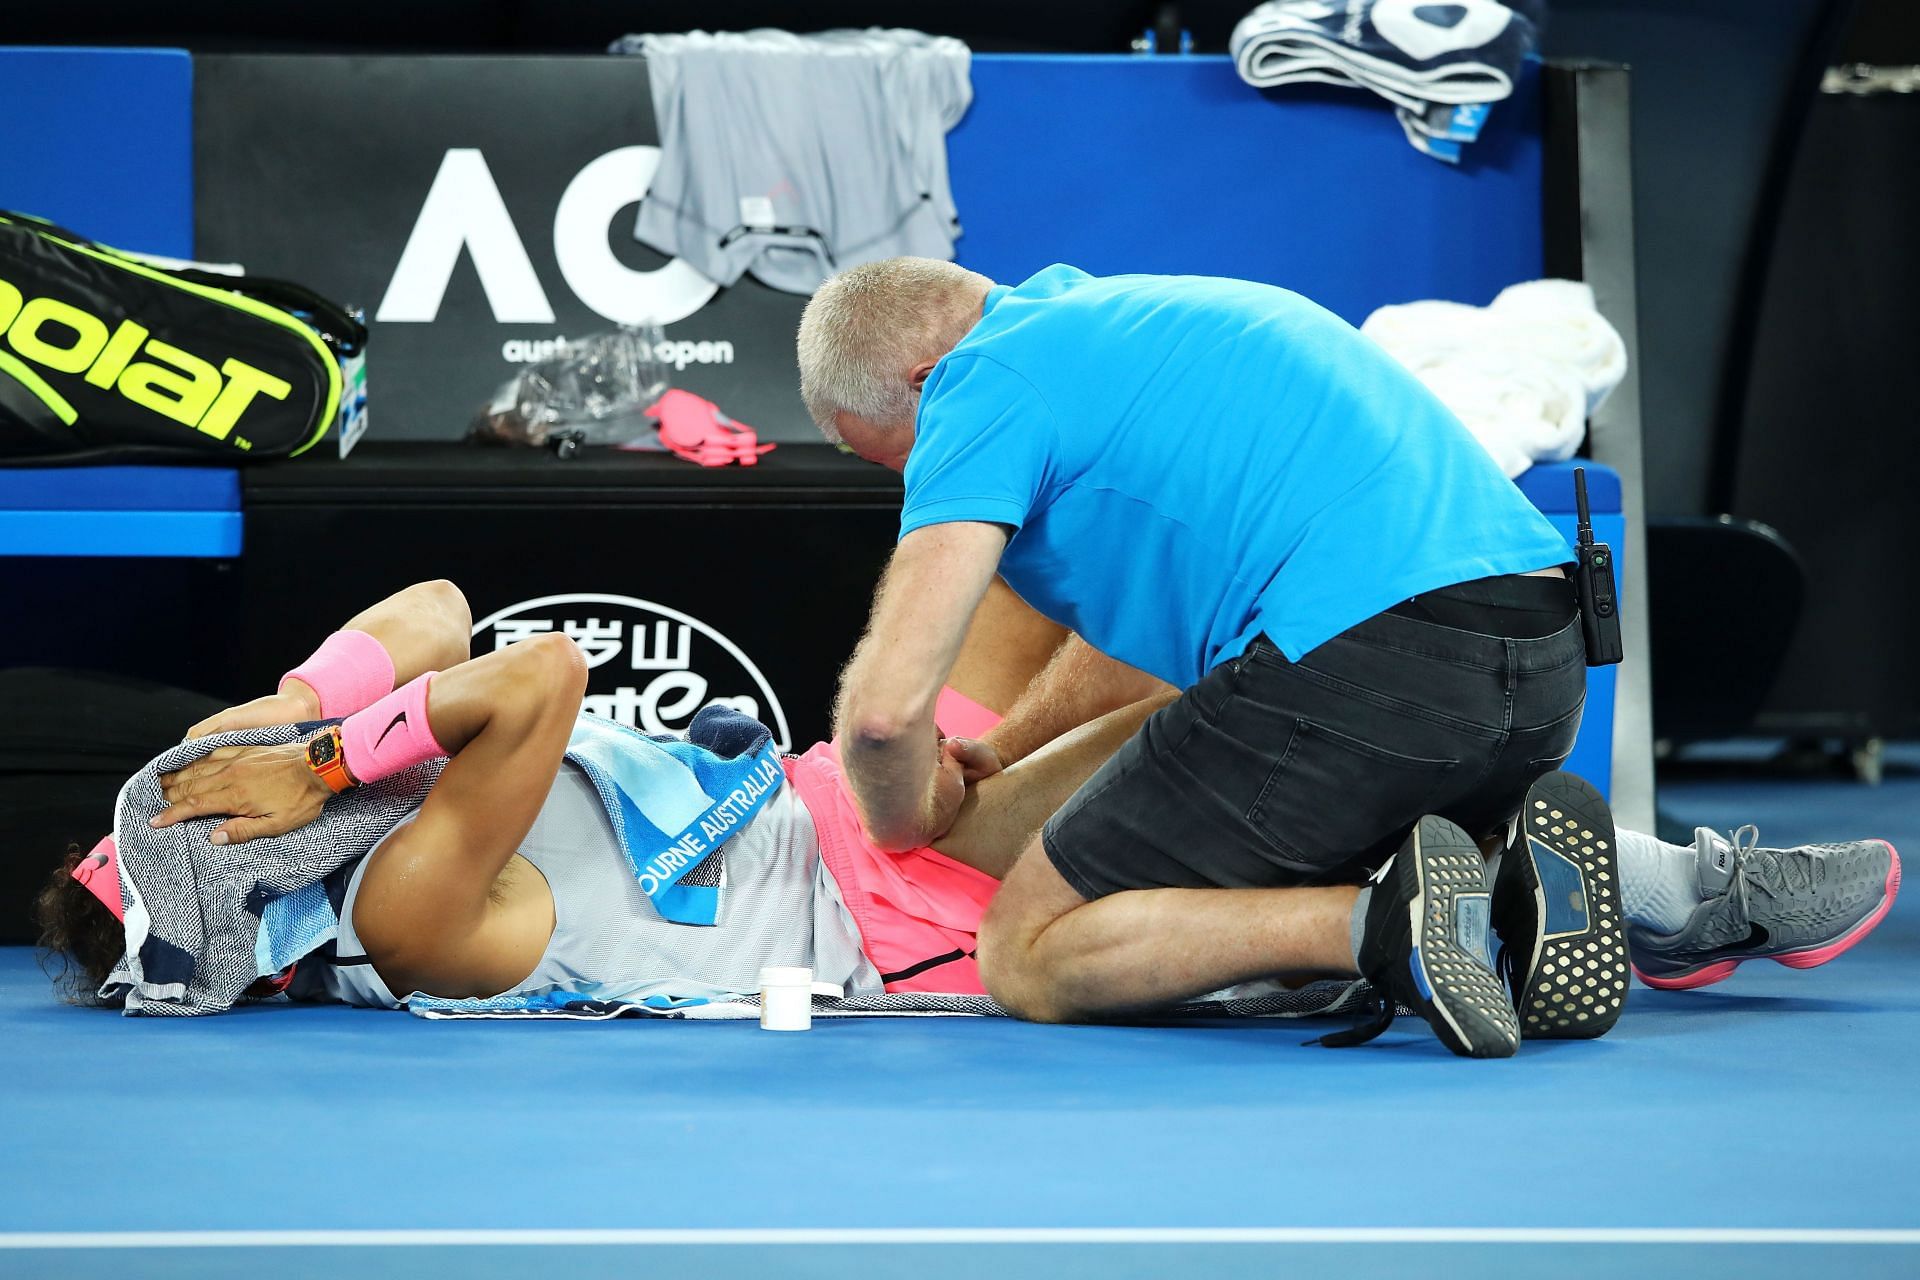 Rafael Nadal at the 2018 Australian Open